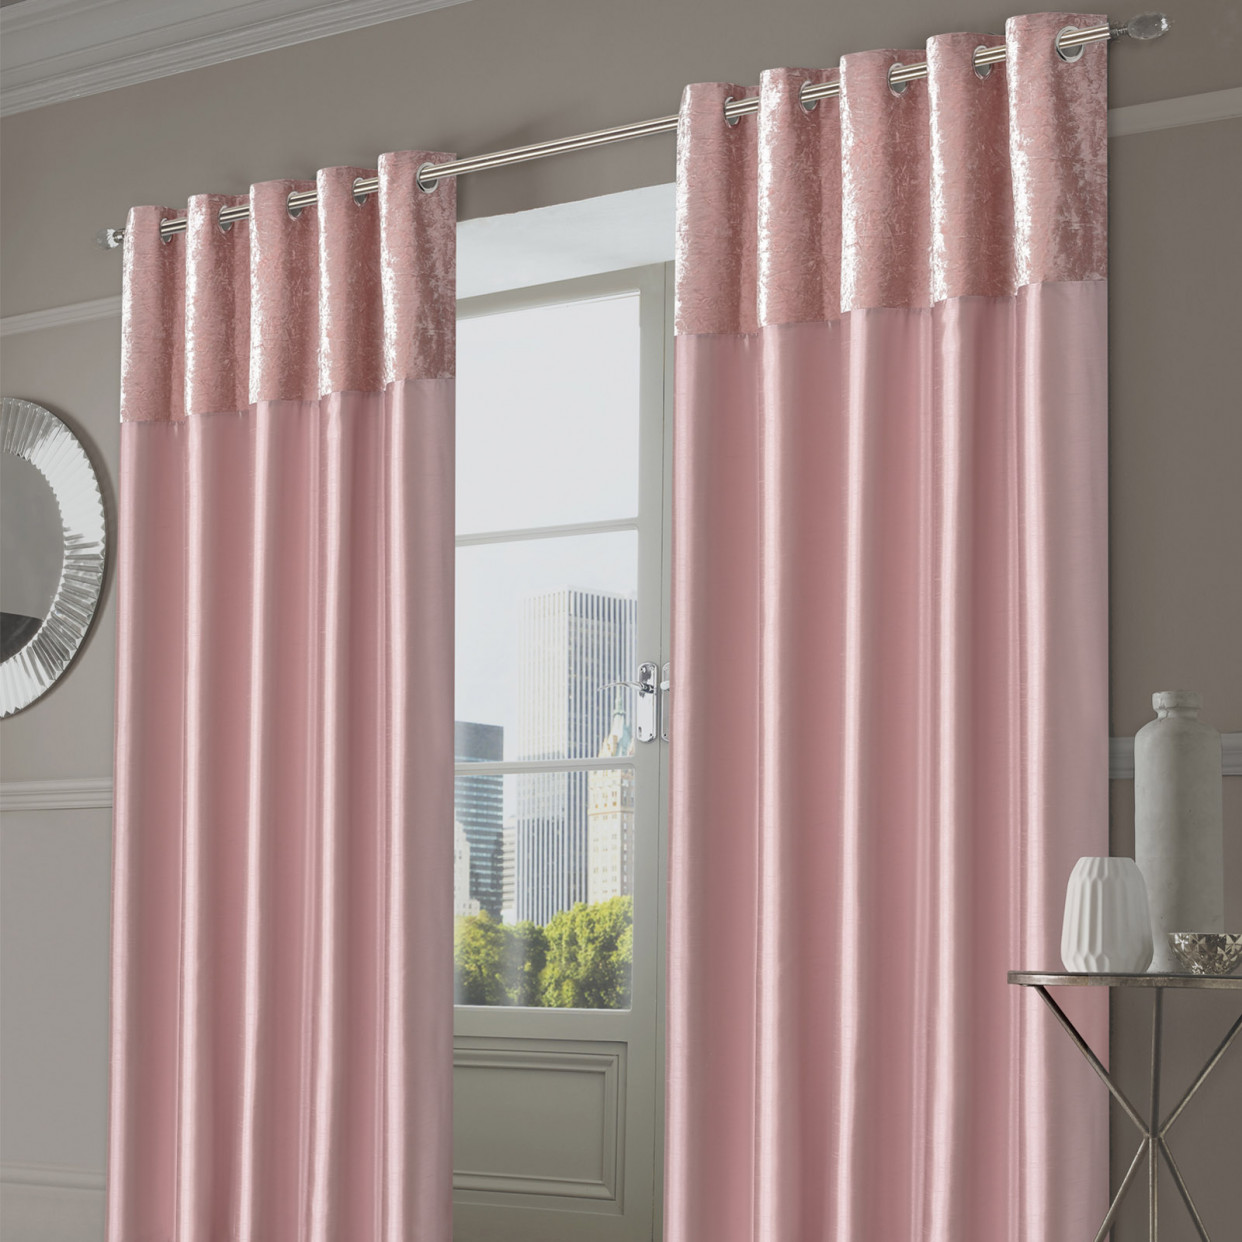 Sienna Home Manhattan Crushed Velvet Band Eyelet Curtains - Blush Pink, 66" x 72">